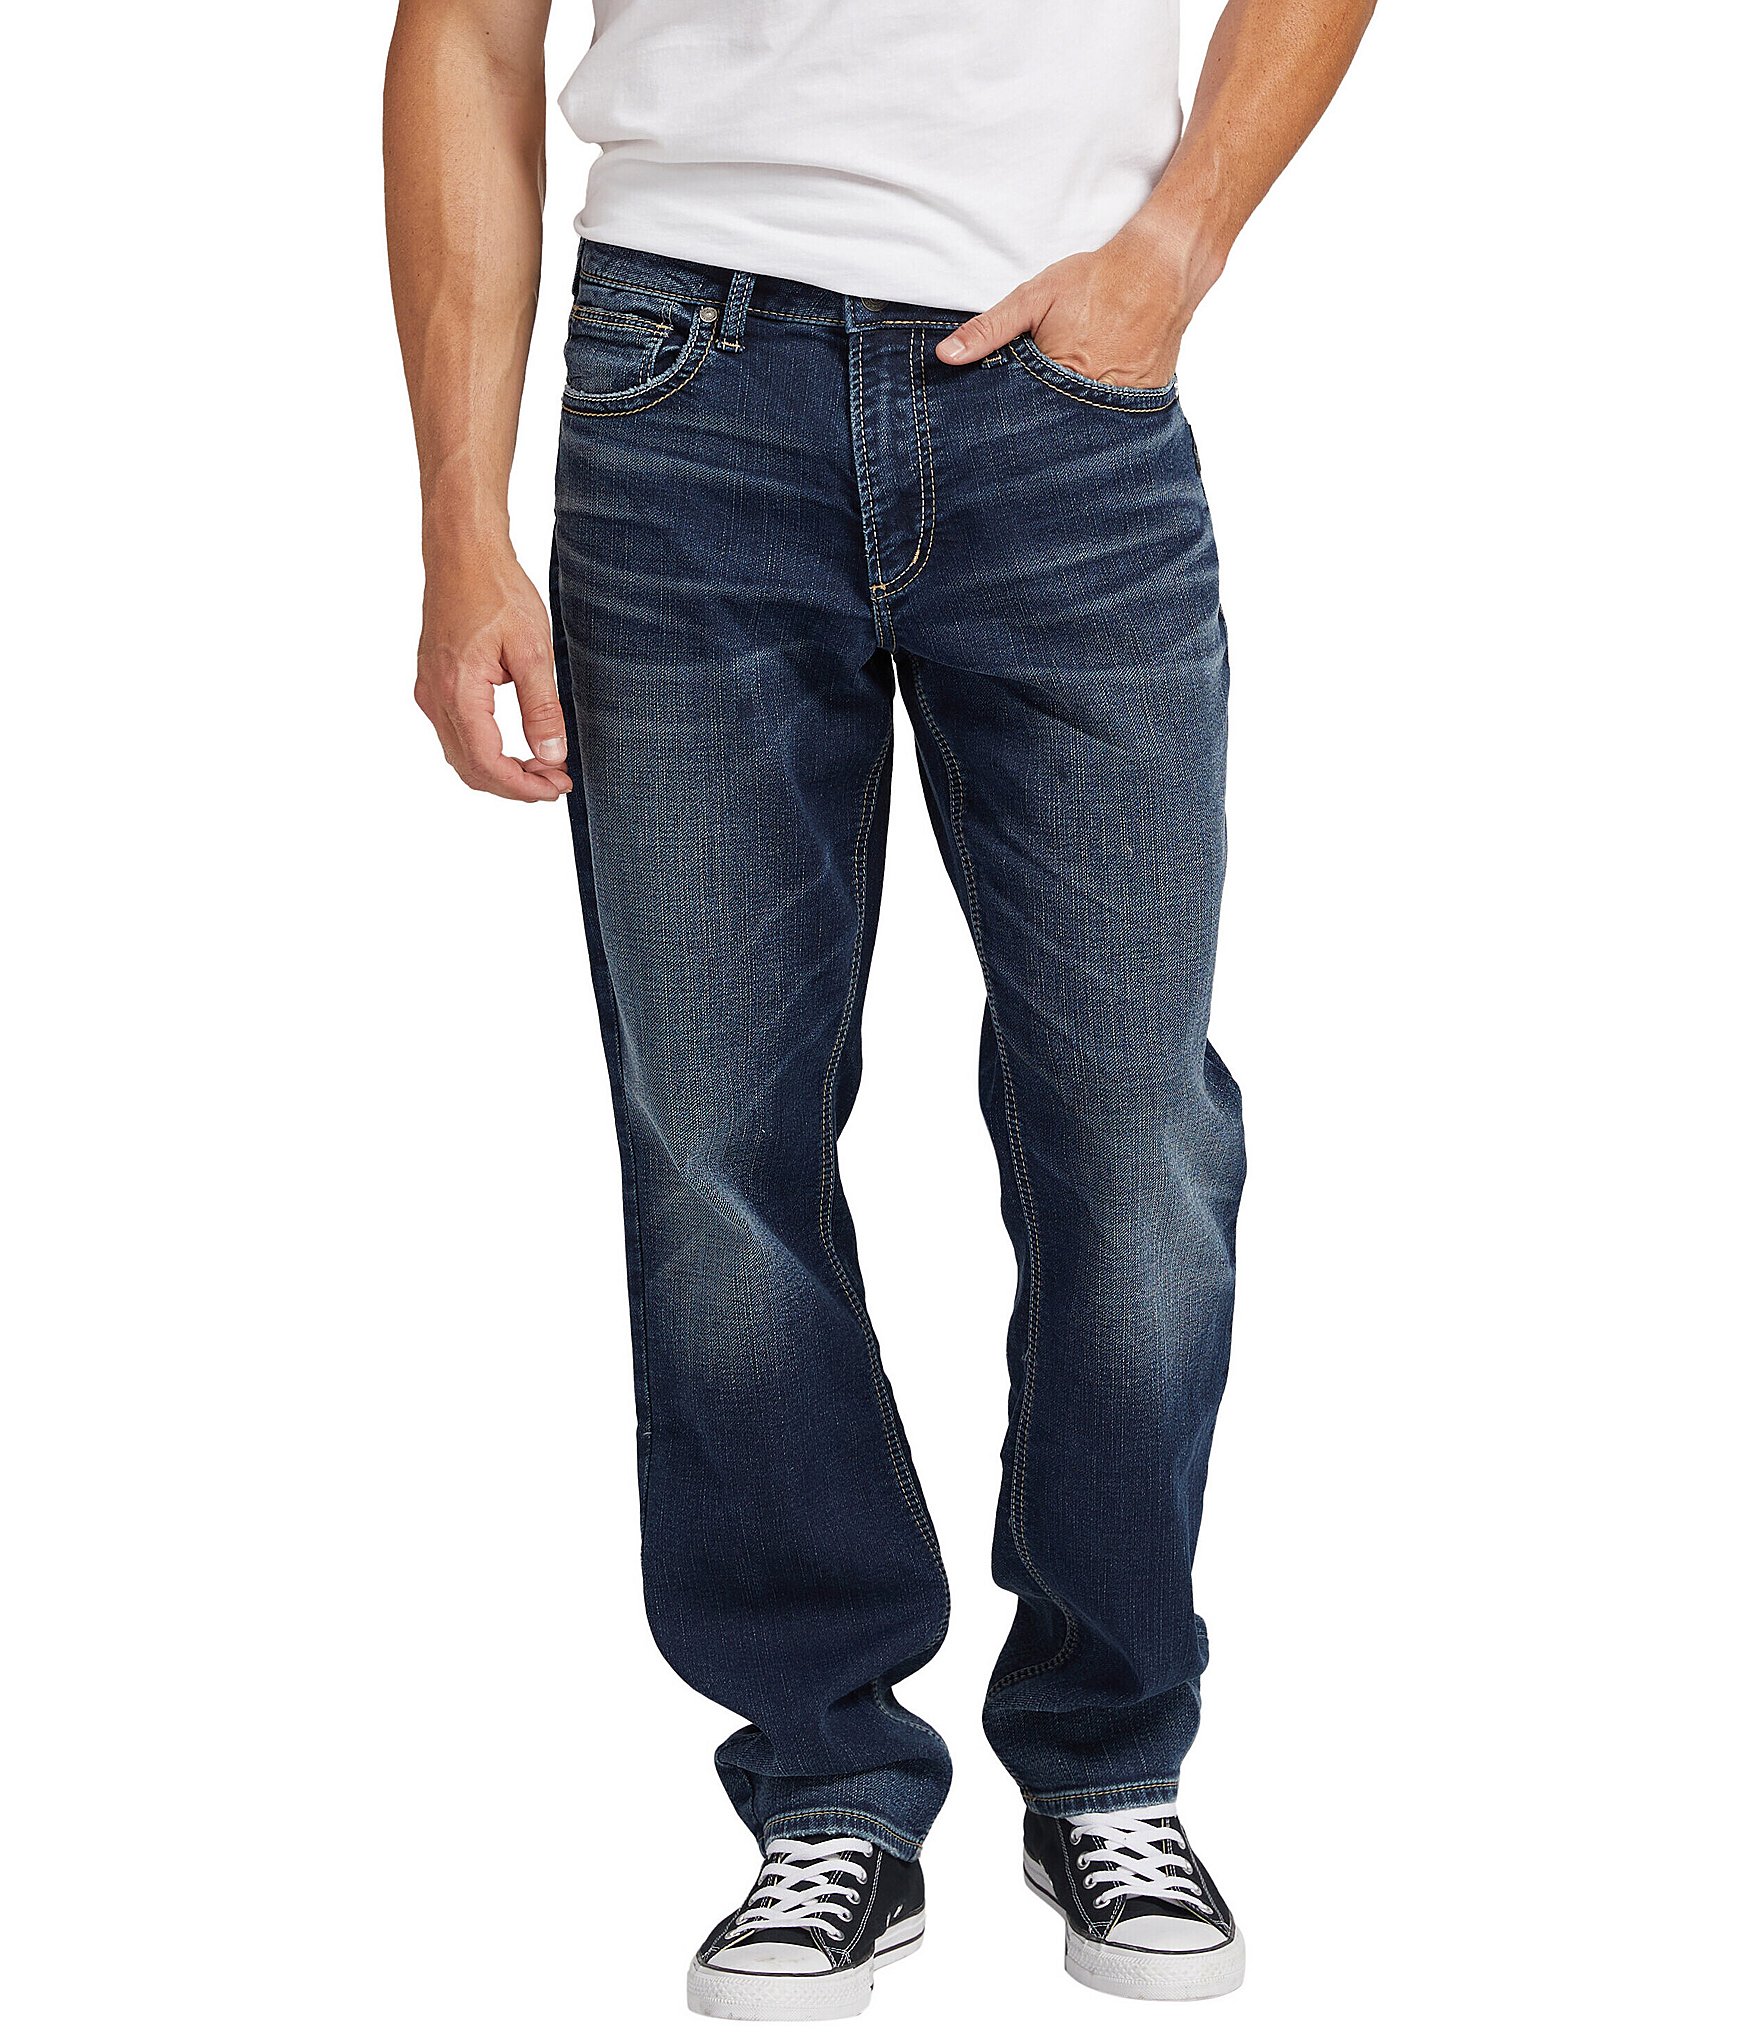 Silver Jeans Co. Eddie Athletic Fit Jeans | Dillard's